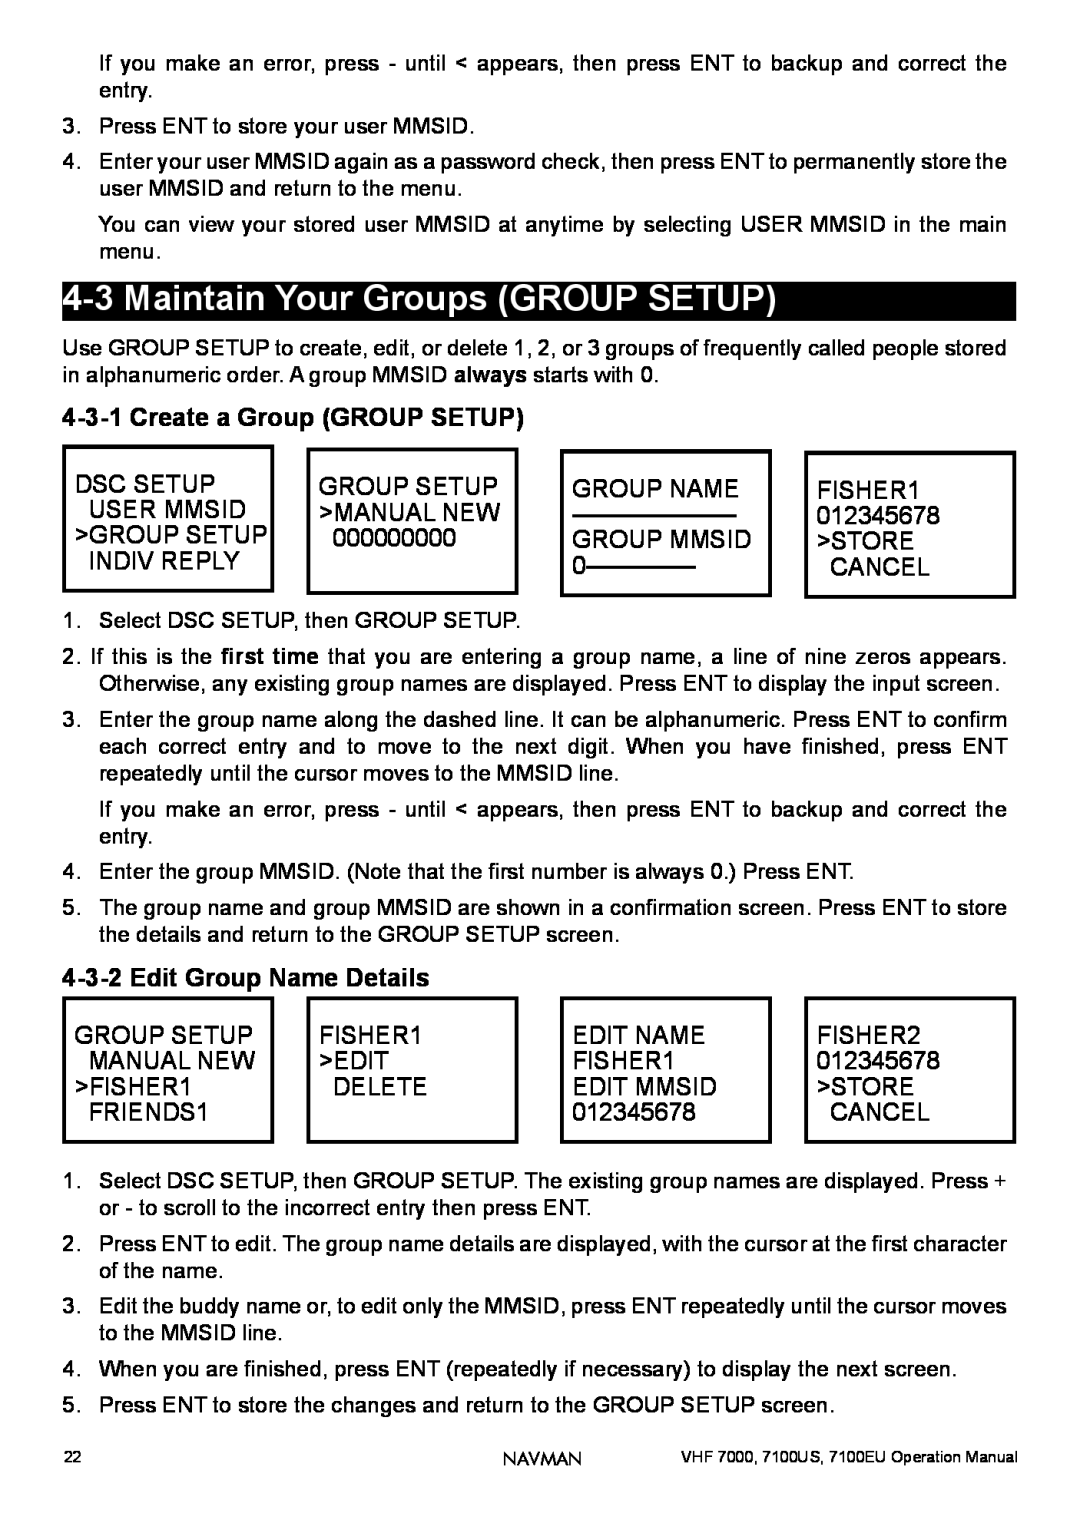 Navman 7000, 7100EU 4-3Maintain Your Groups GROUP SETUP, 4-3-1Create a Group GROUP SETUP, 4-3-2Edit Group Name Details 